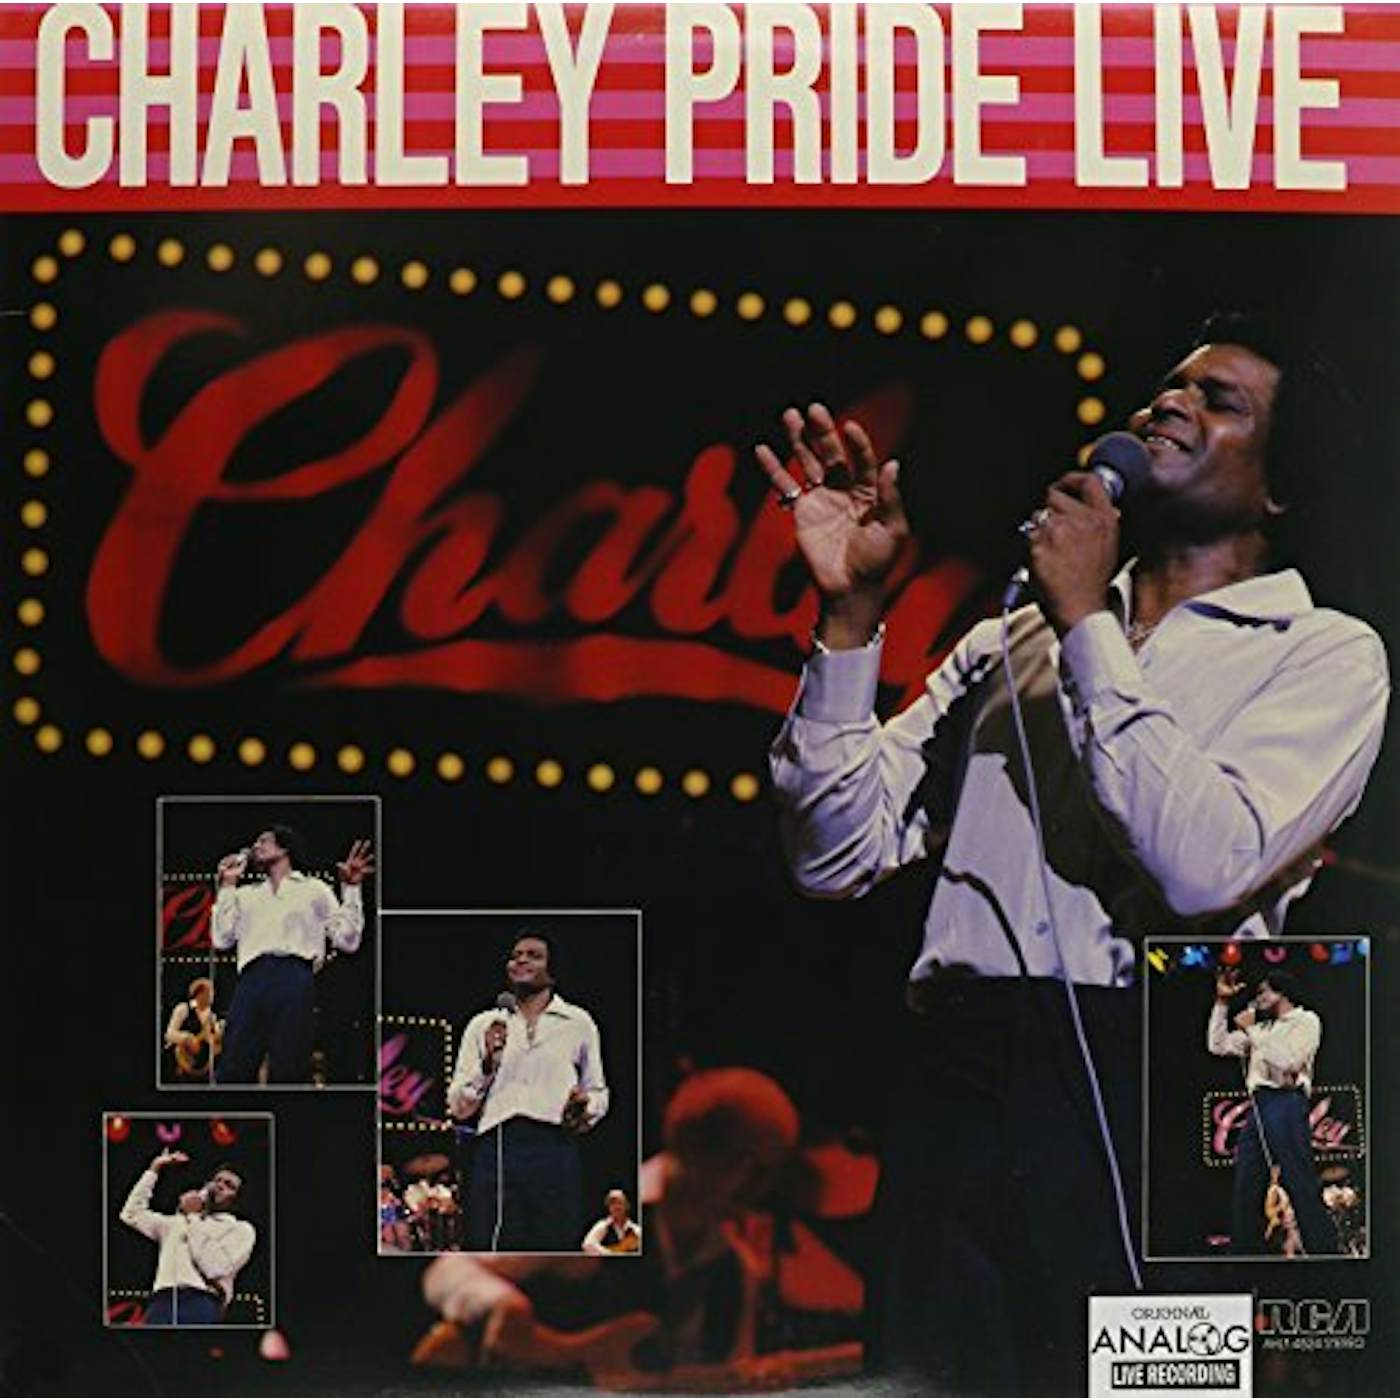 Charley Pride Live Vinyl Record